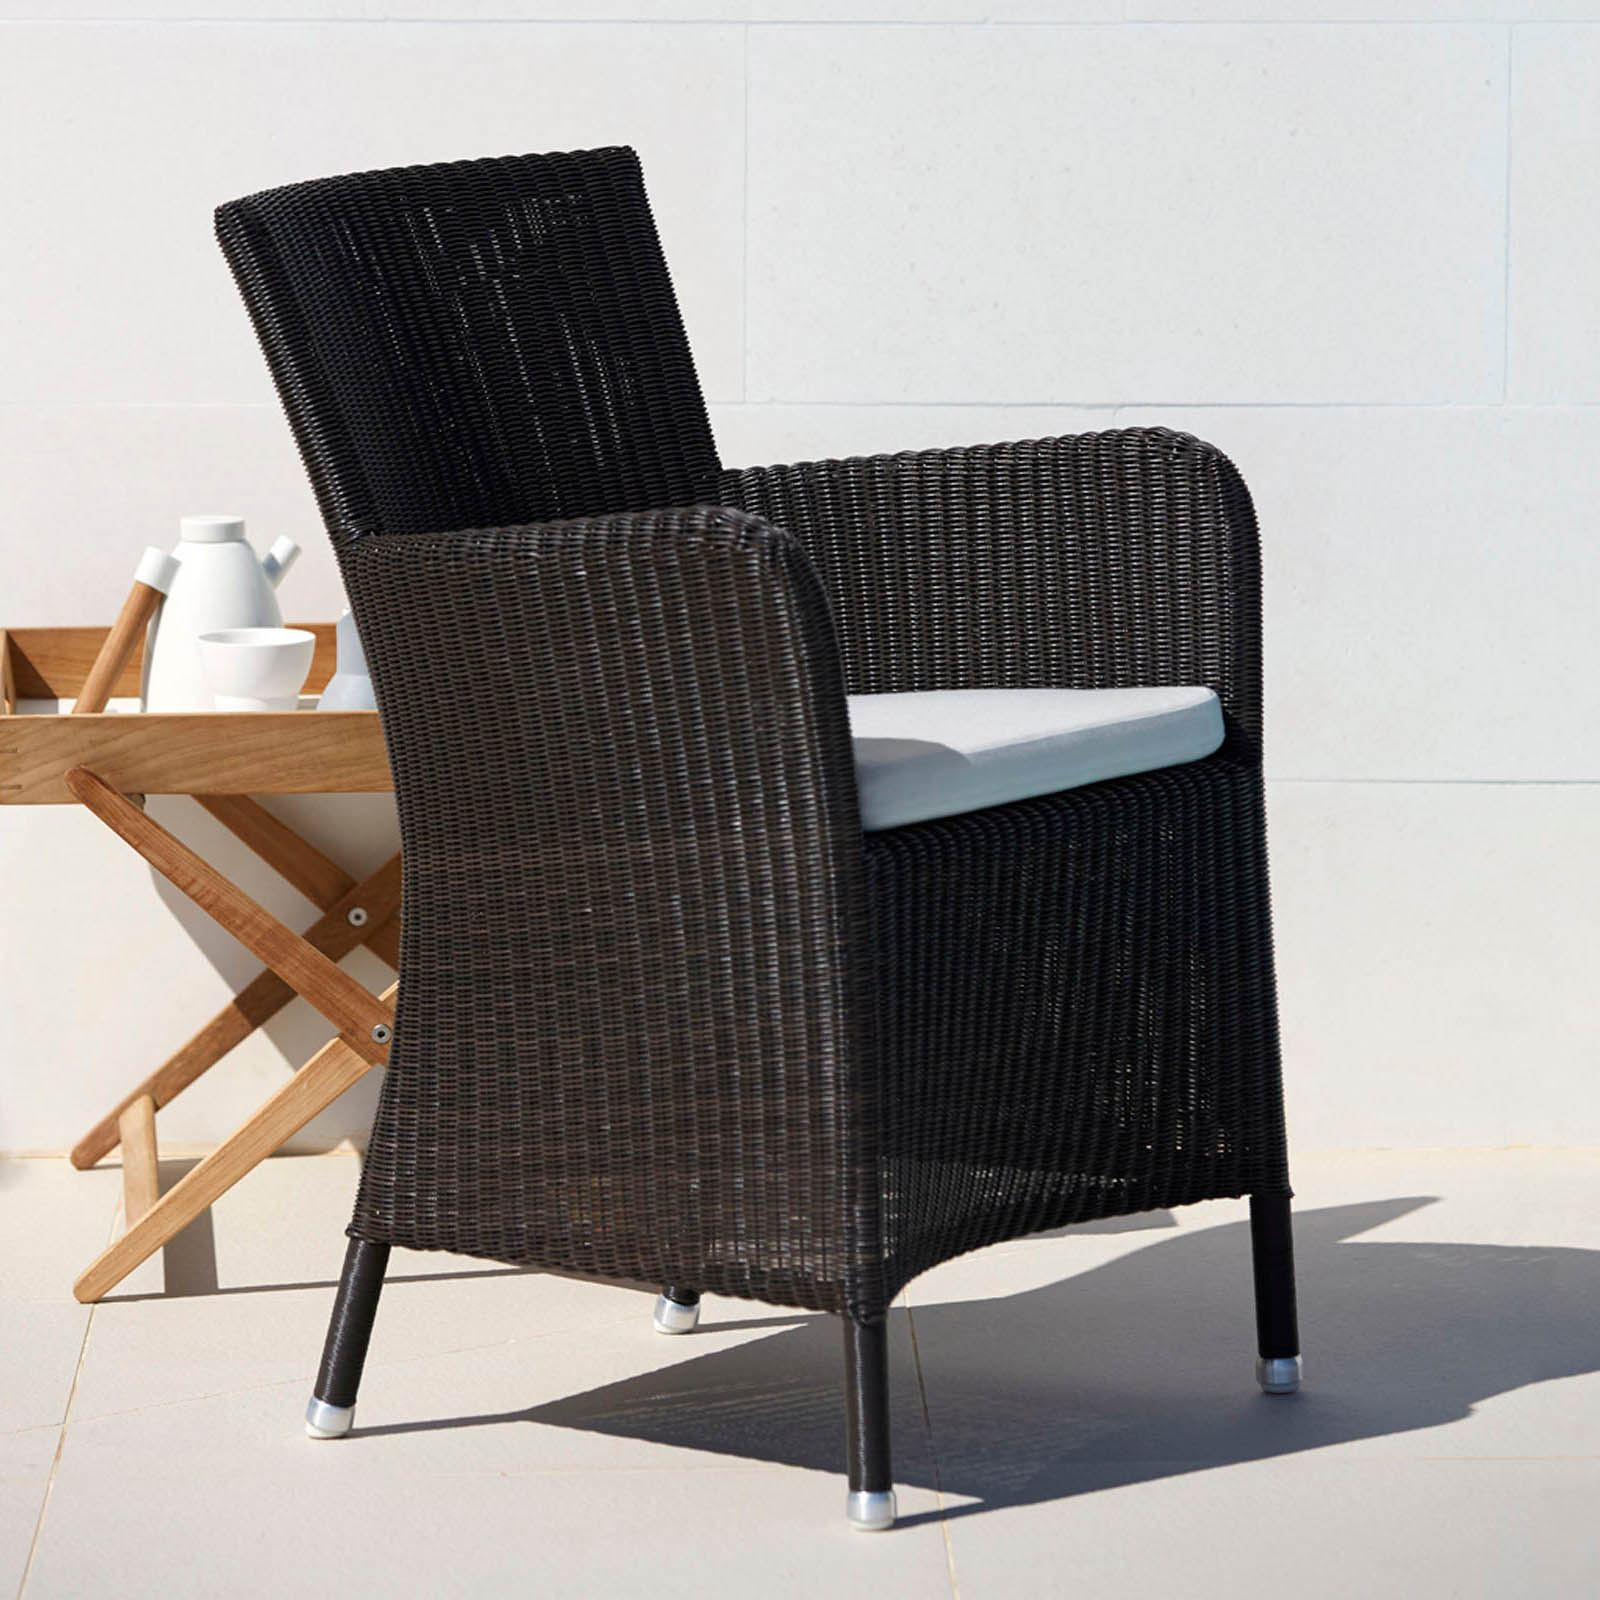 Hampsted Stuhl aus Cane-line Weave in Natural mit Kissen aus Cane-line Natté in Grey